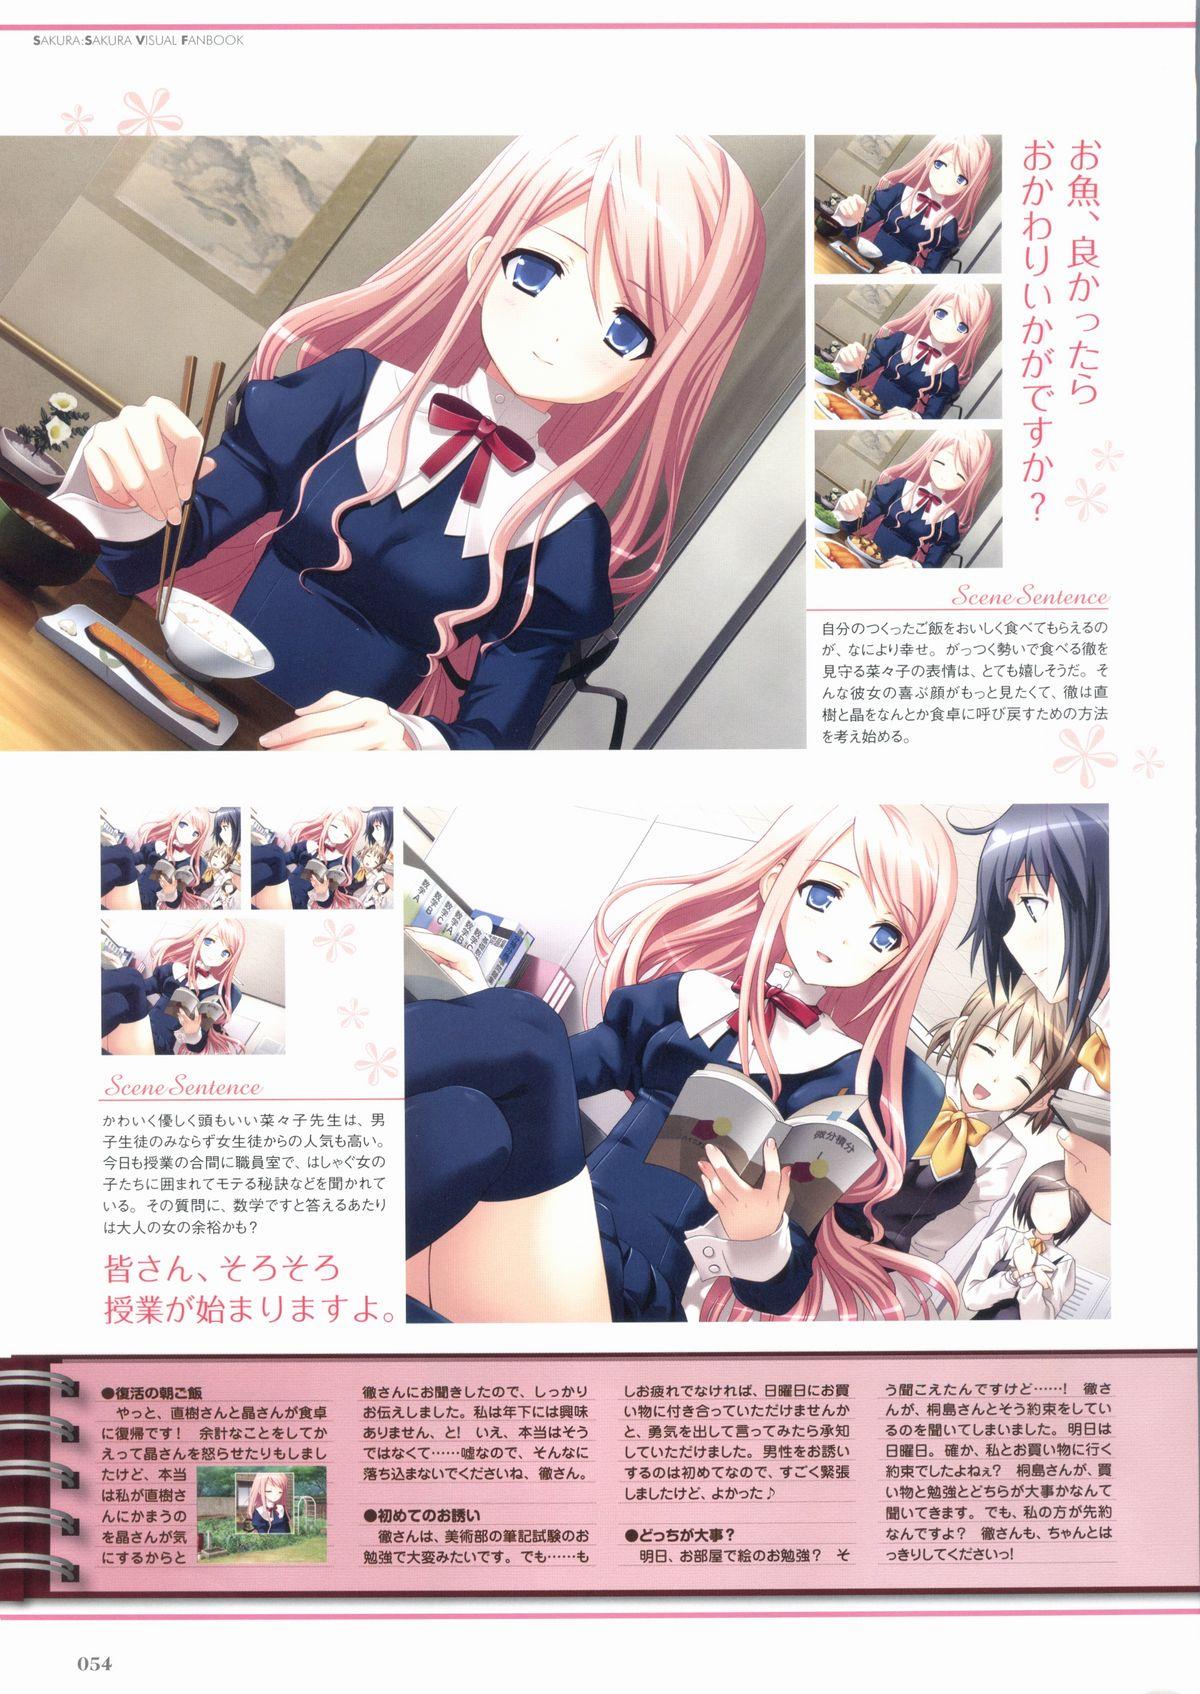 Sakura Sakura Visual Fan Book 59